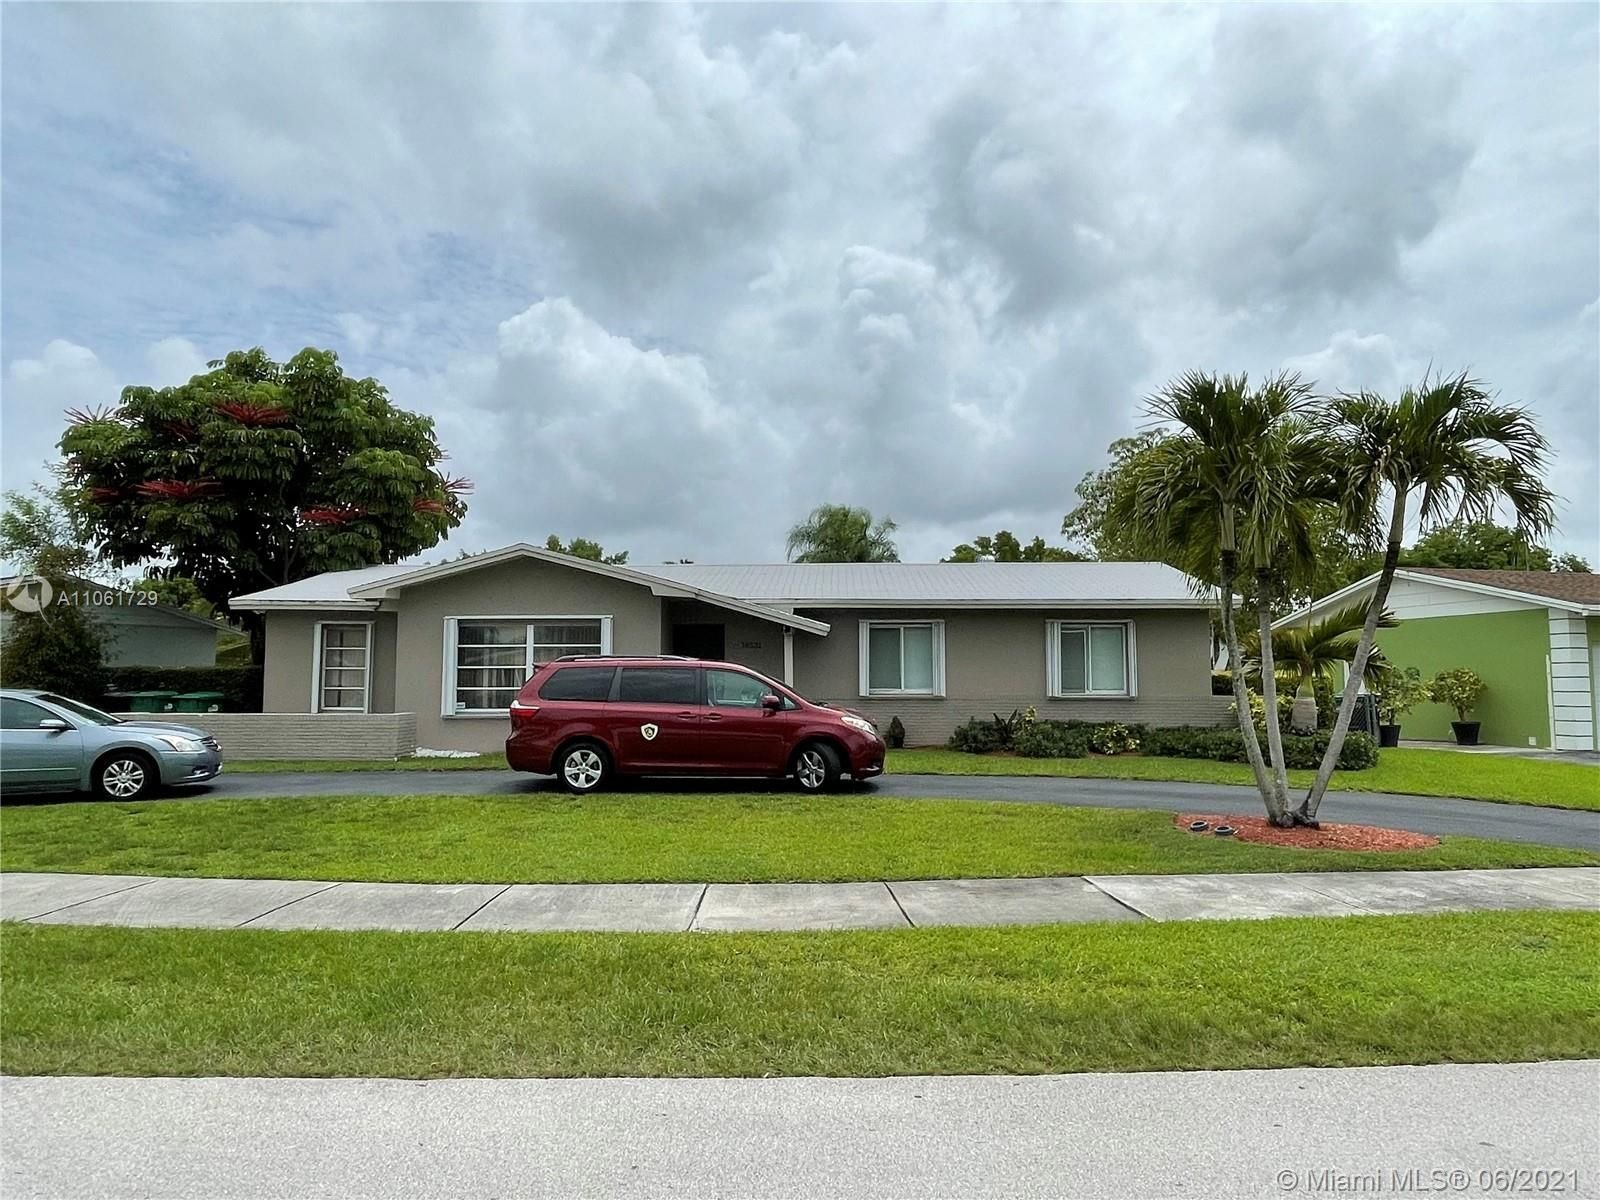 Real estate property located at 10531 124th Ave, Miami-Dade County, Miami, FL